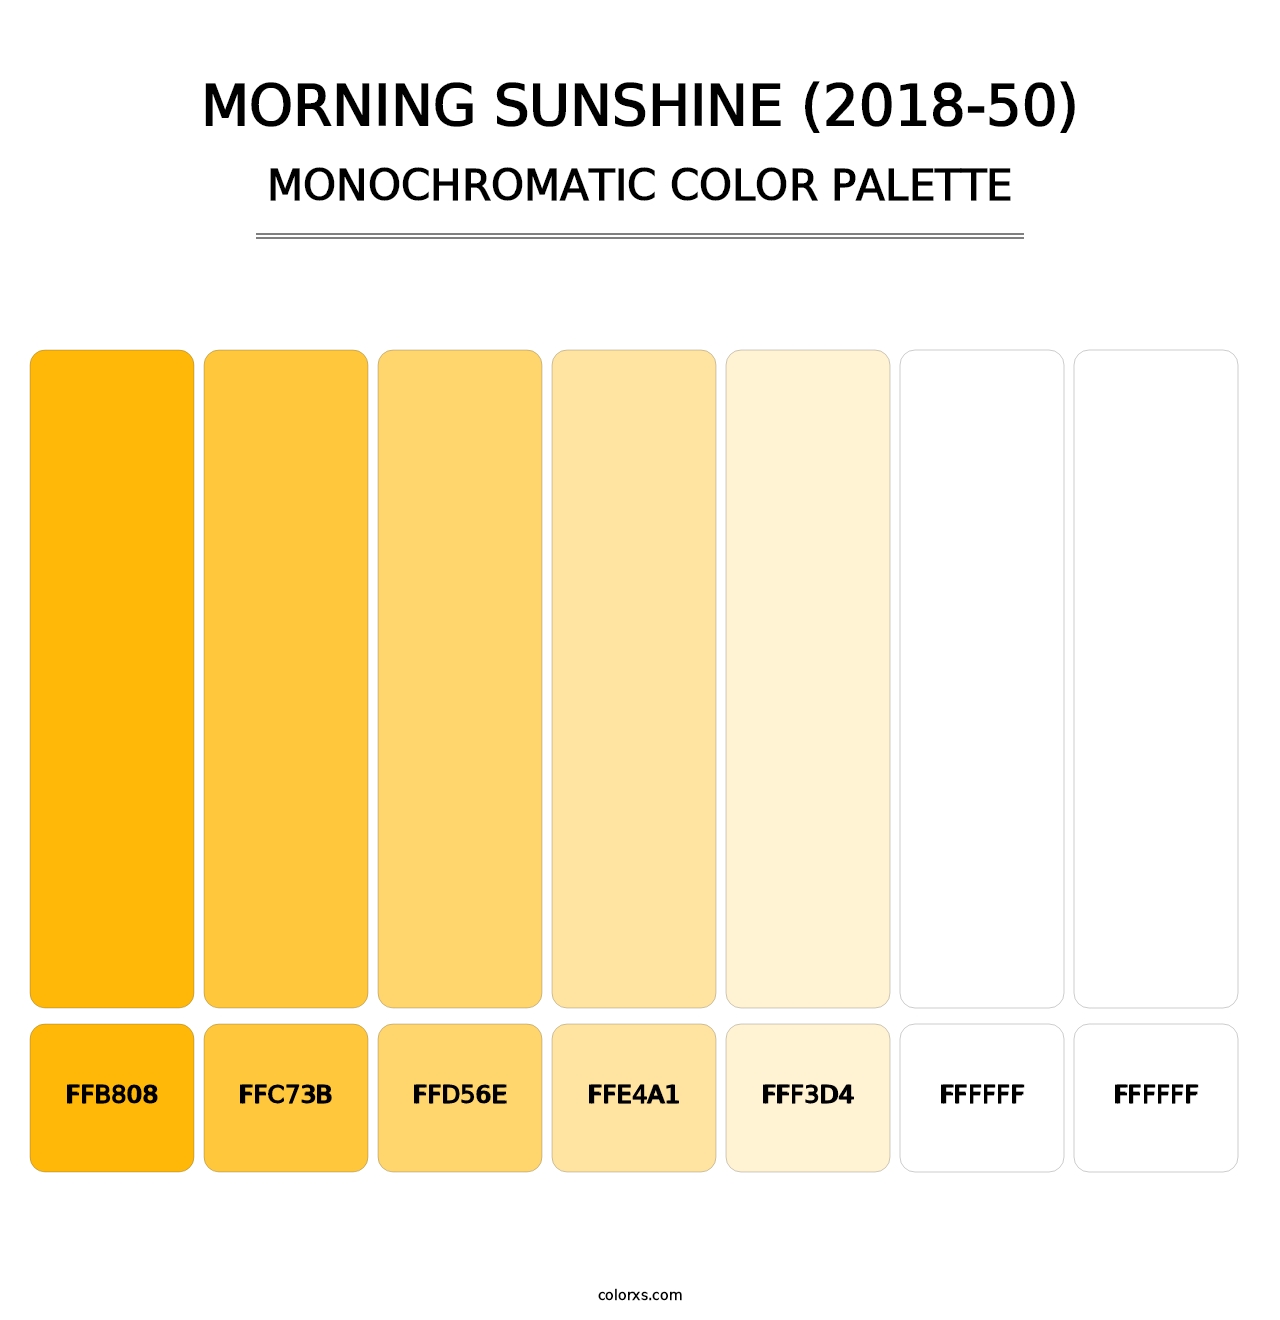 Morning Sunshine (2018-50) - Monochromatic Color Palette